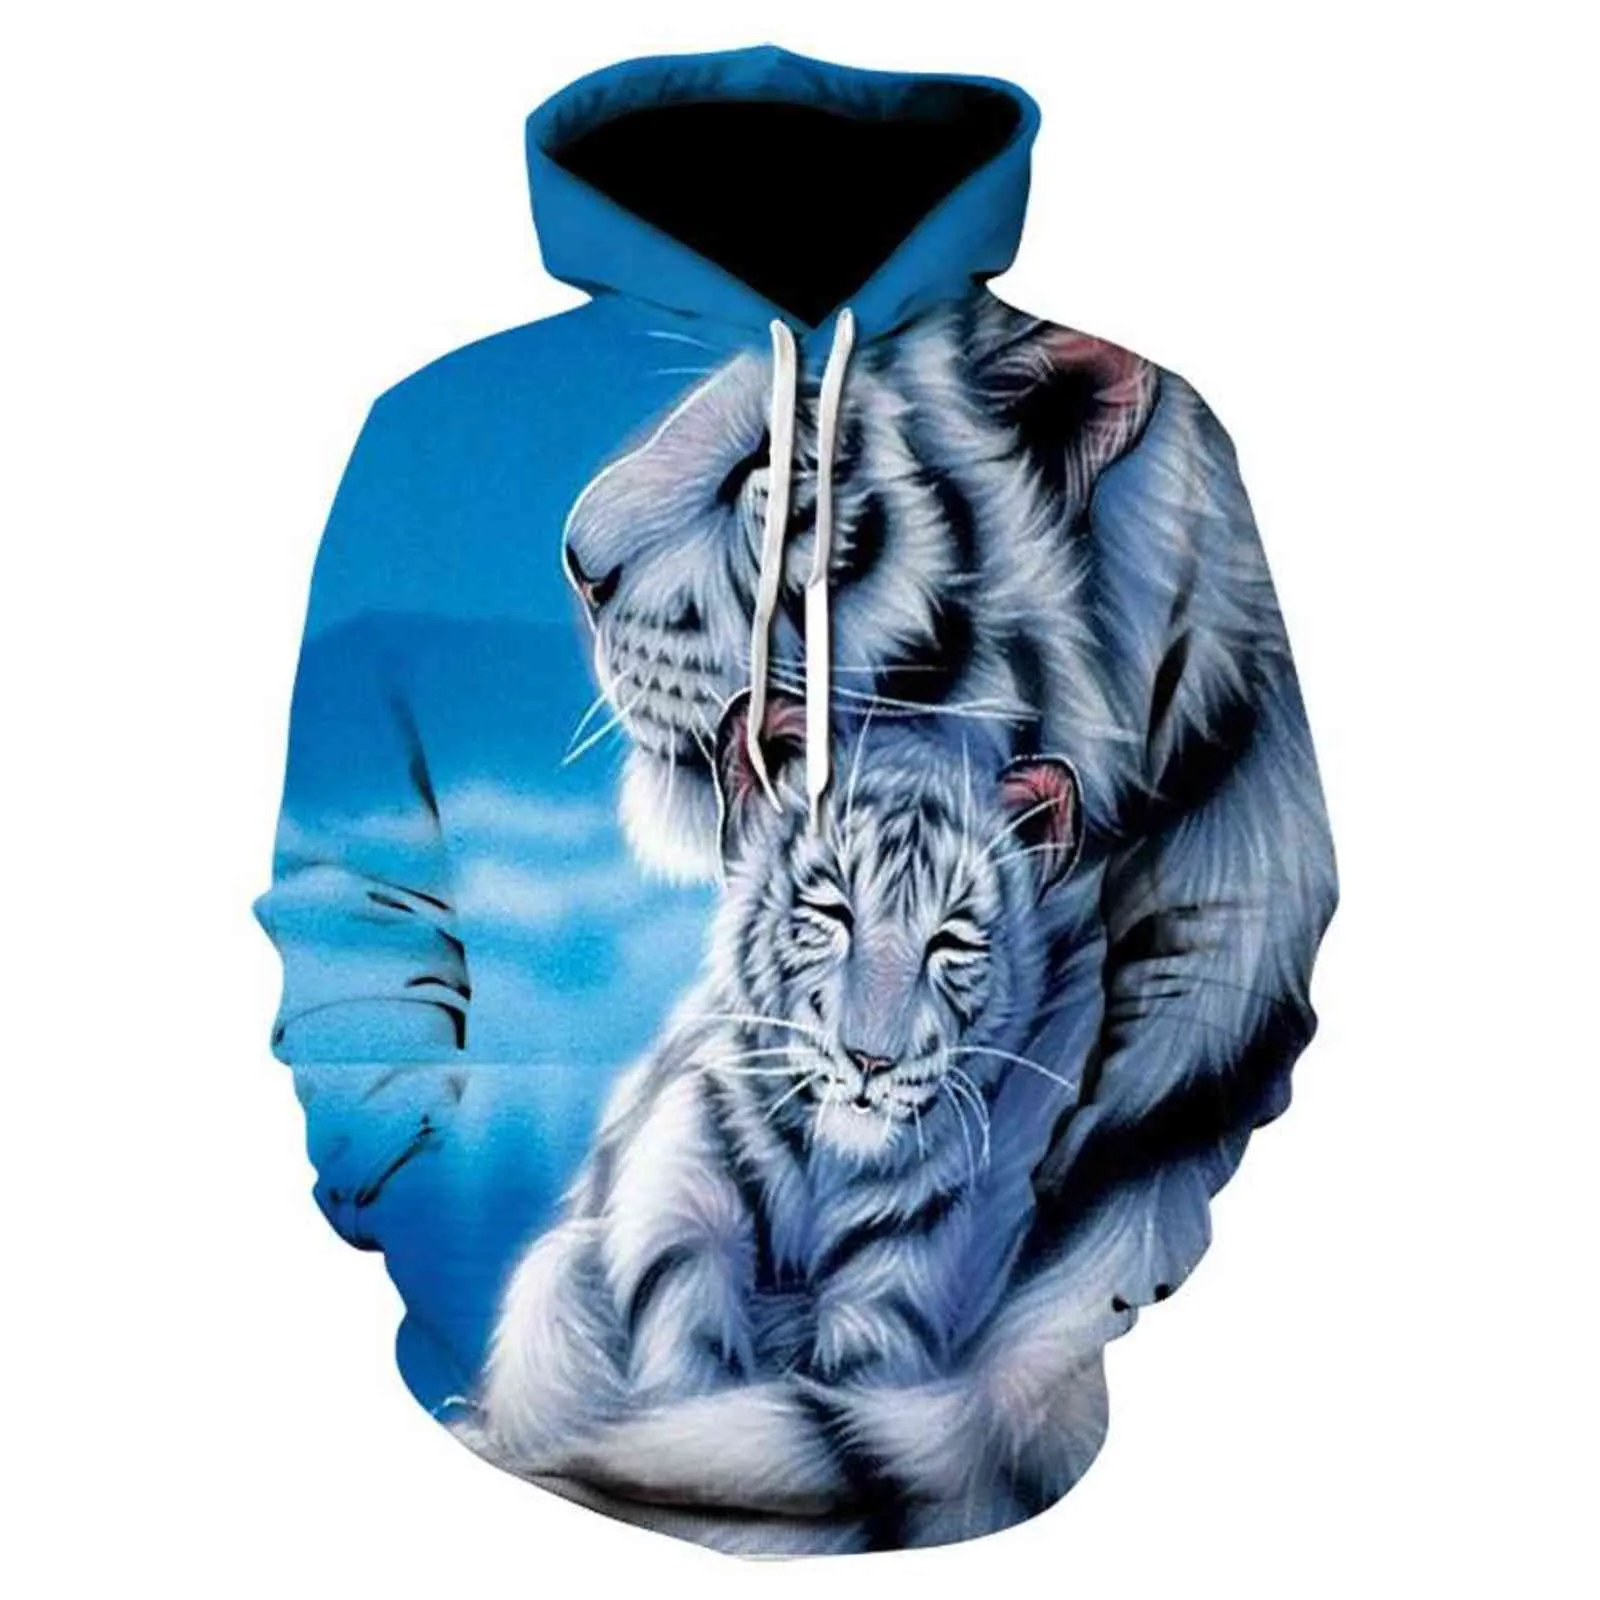 2021 New Men/women Hooded Hoodies Cap Windbreaker Sweatshirts Fashion Brand Autumn Winter Tiger Animal Printing Clothes Y1120